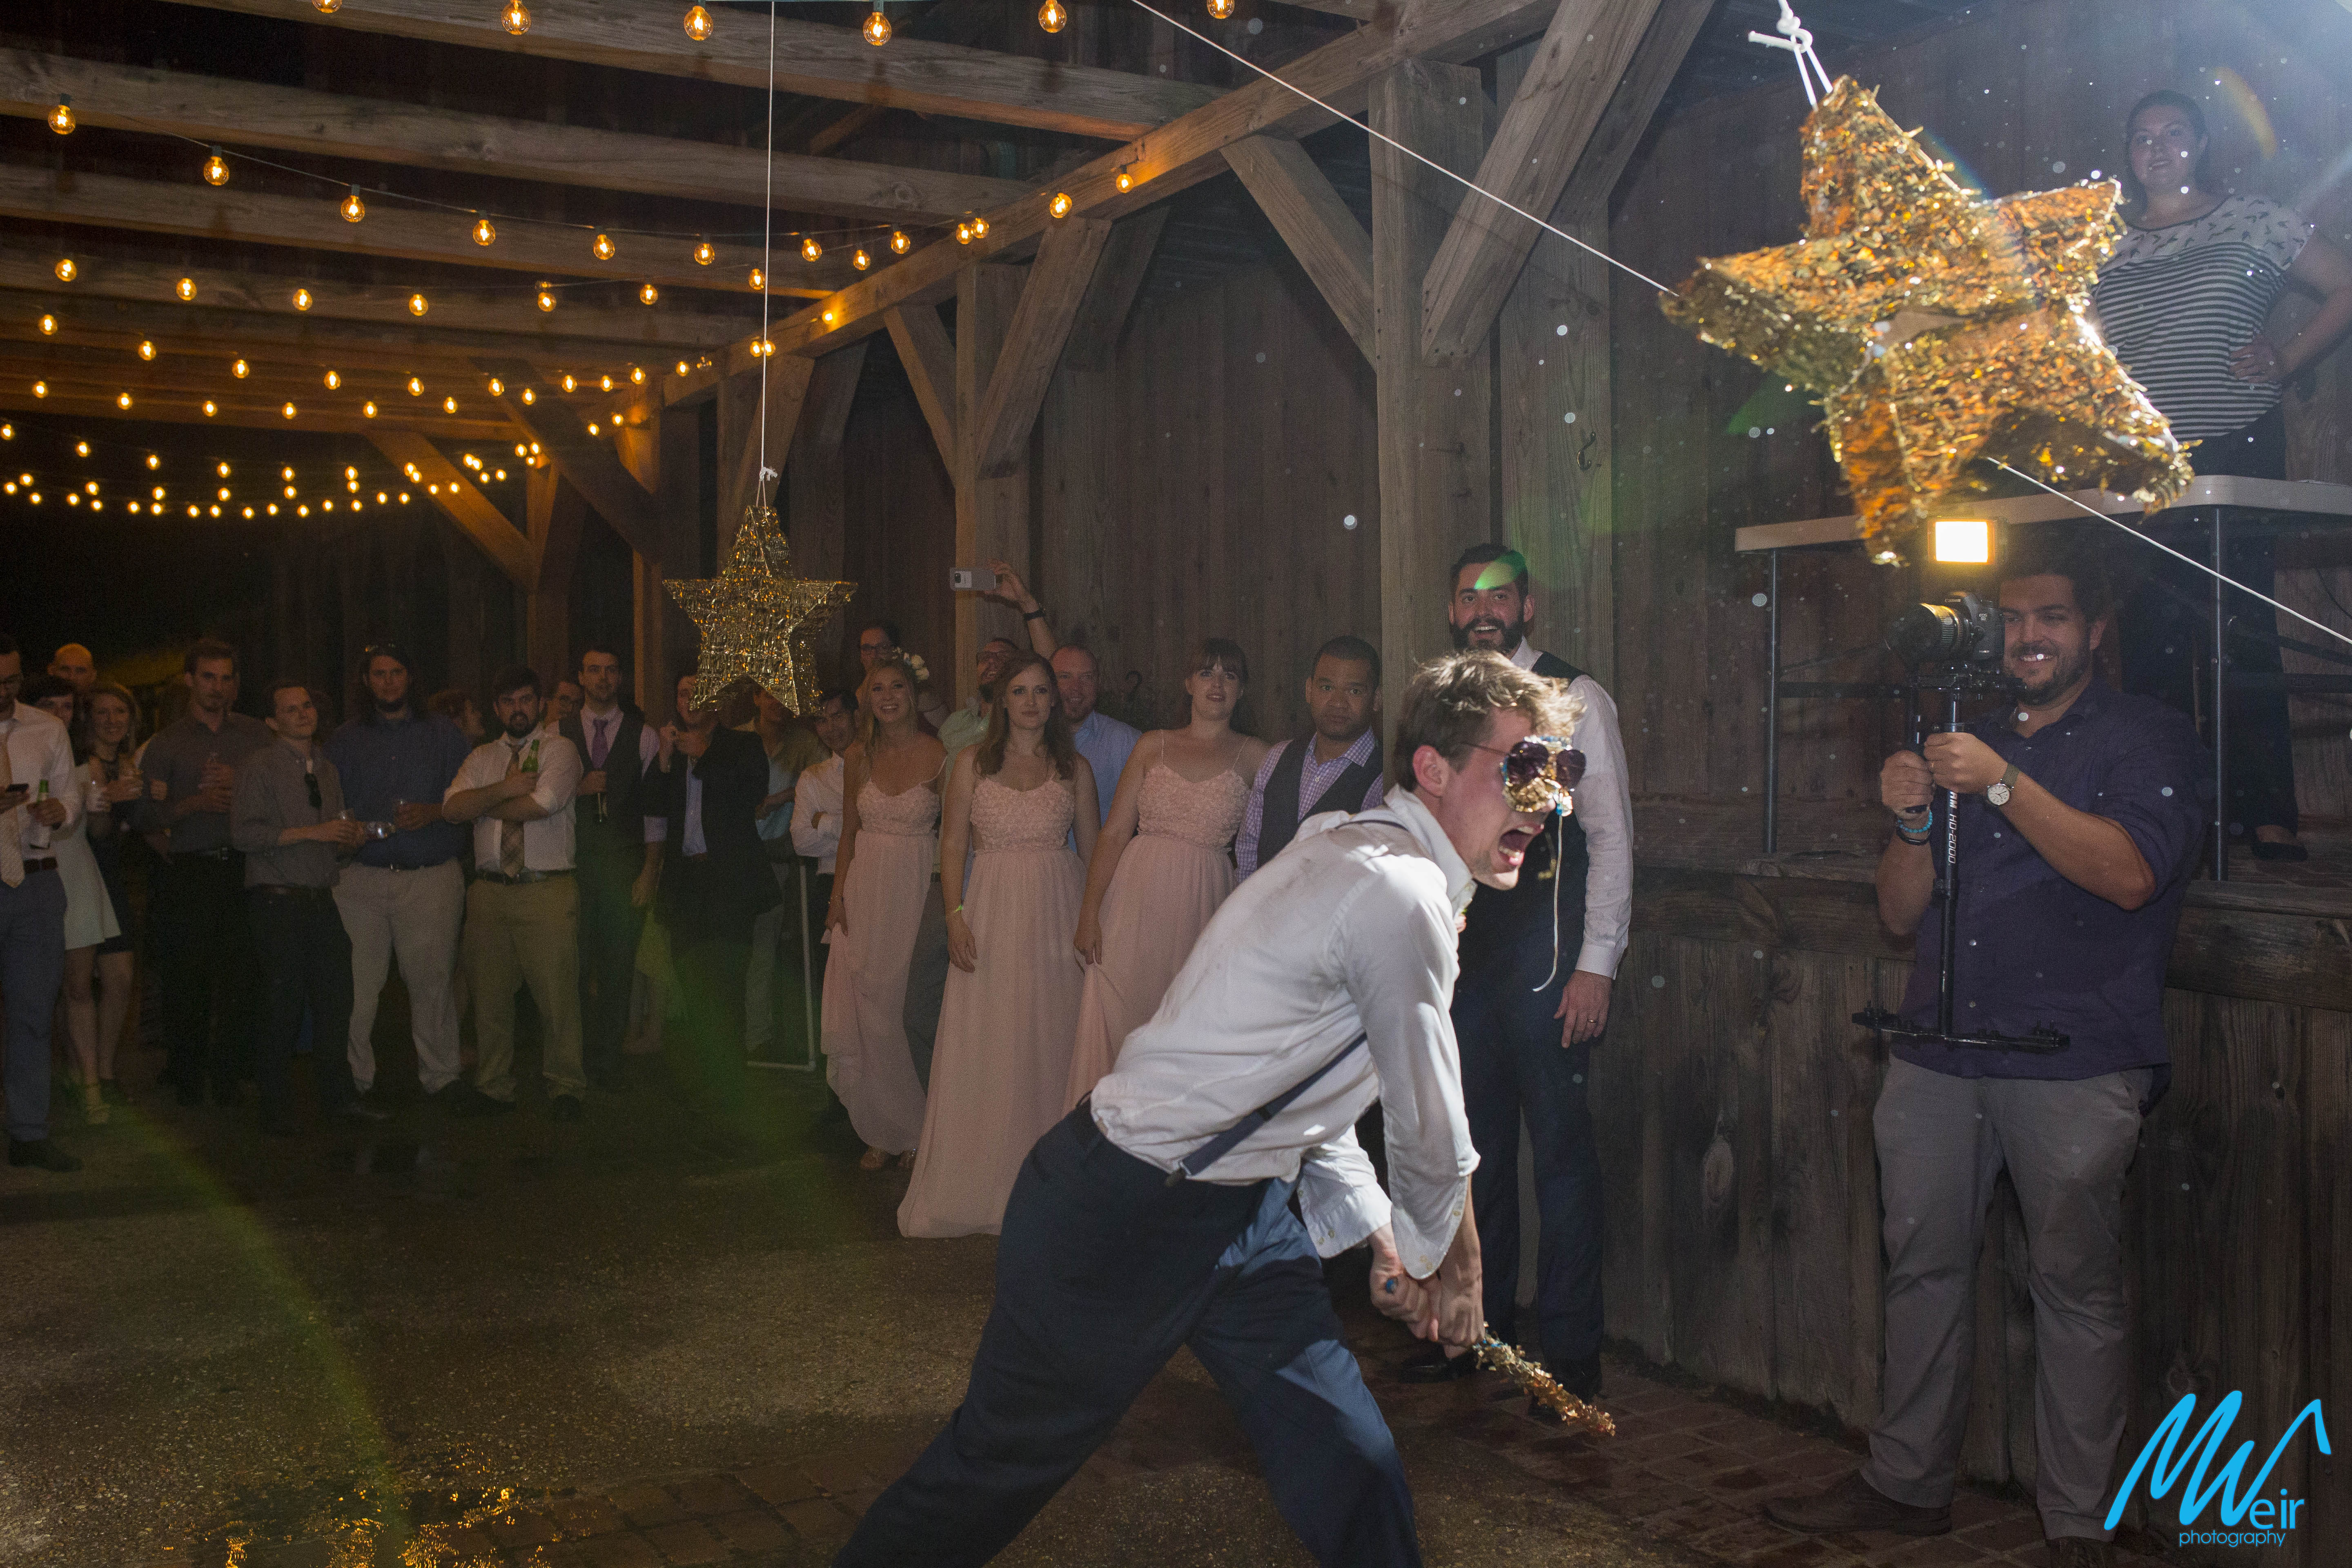 groomsmen hit a pinata at a outdoor wedding reception